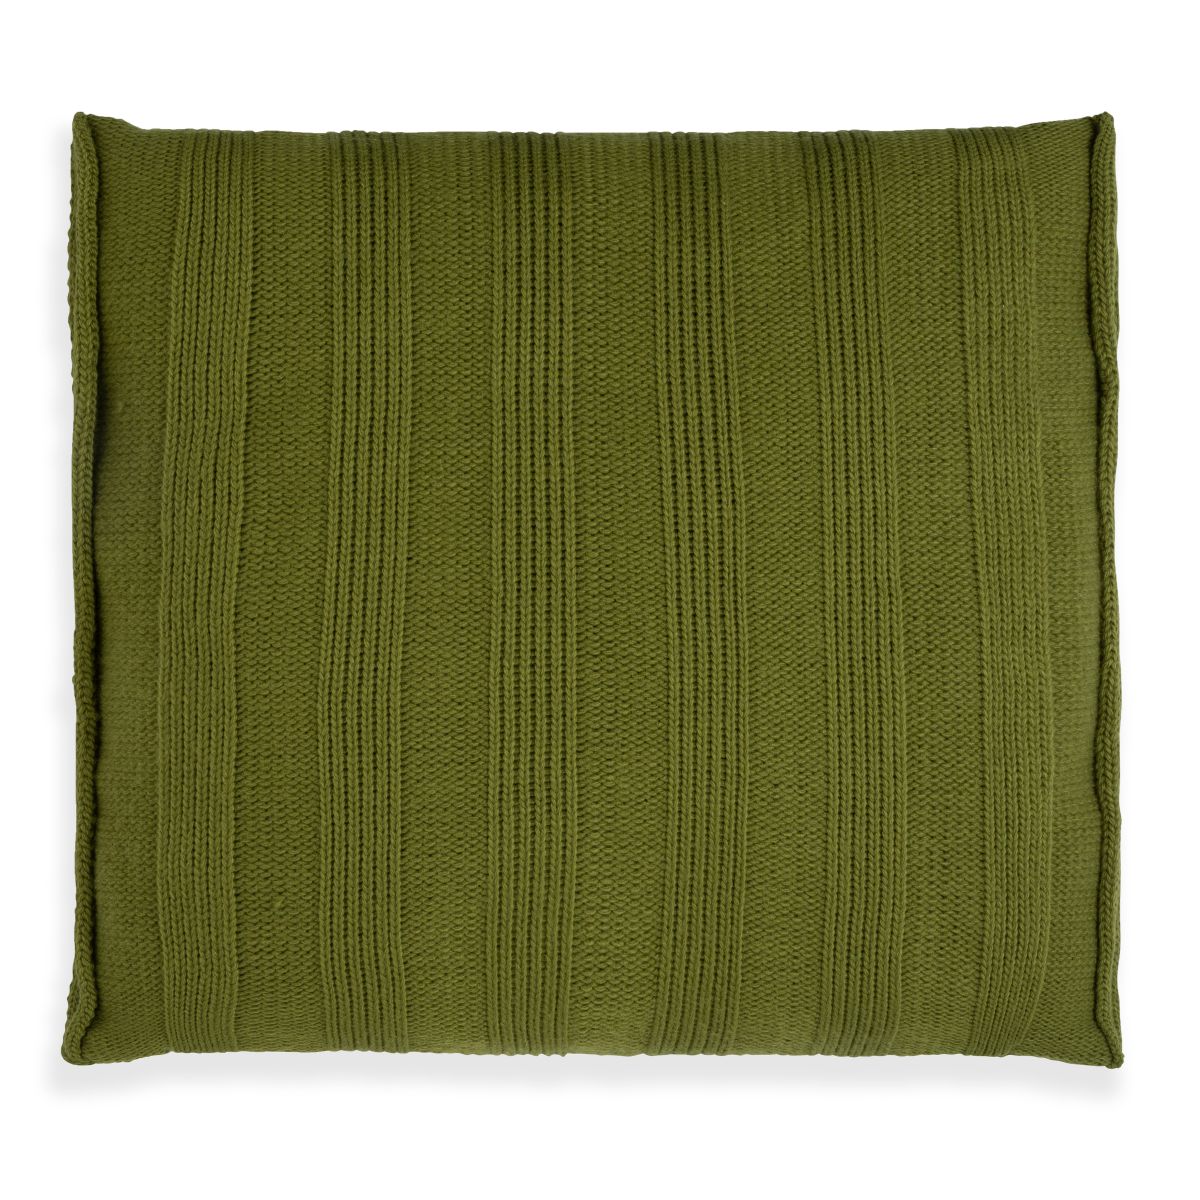 jesse cushion moss green 50x50